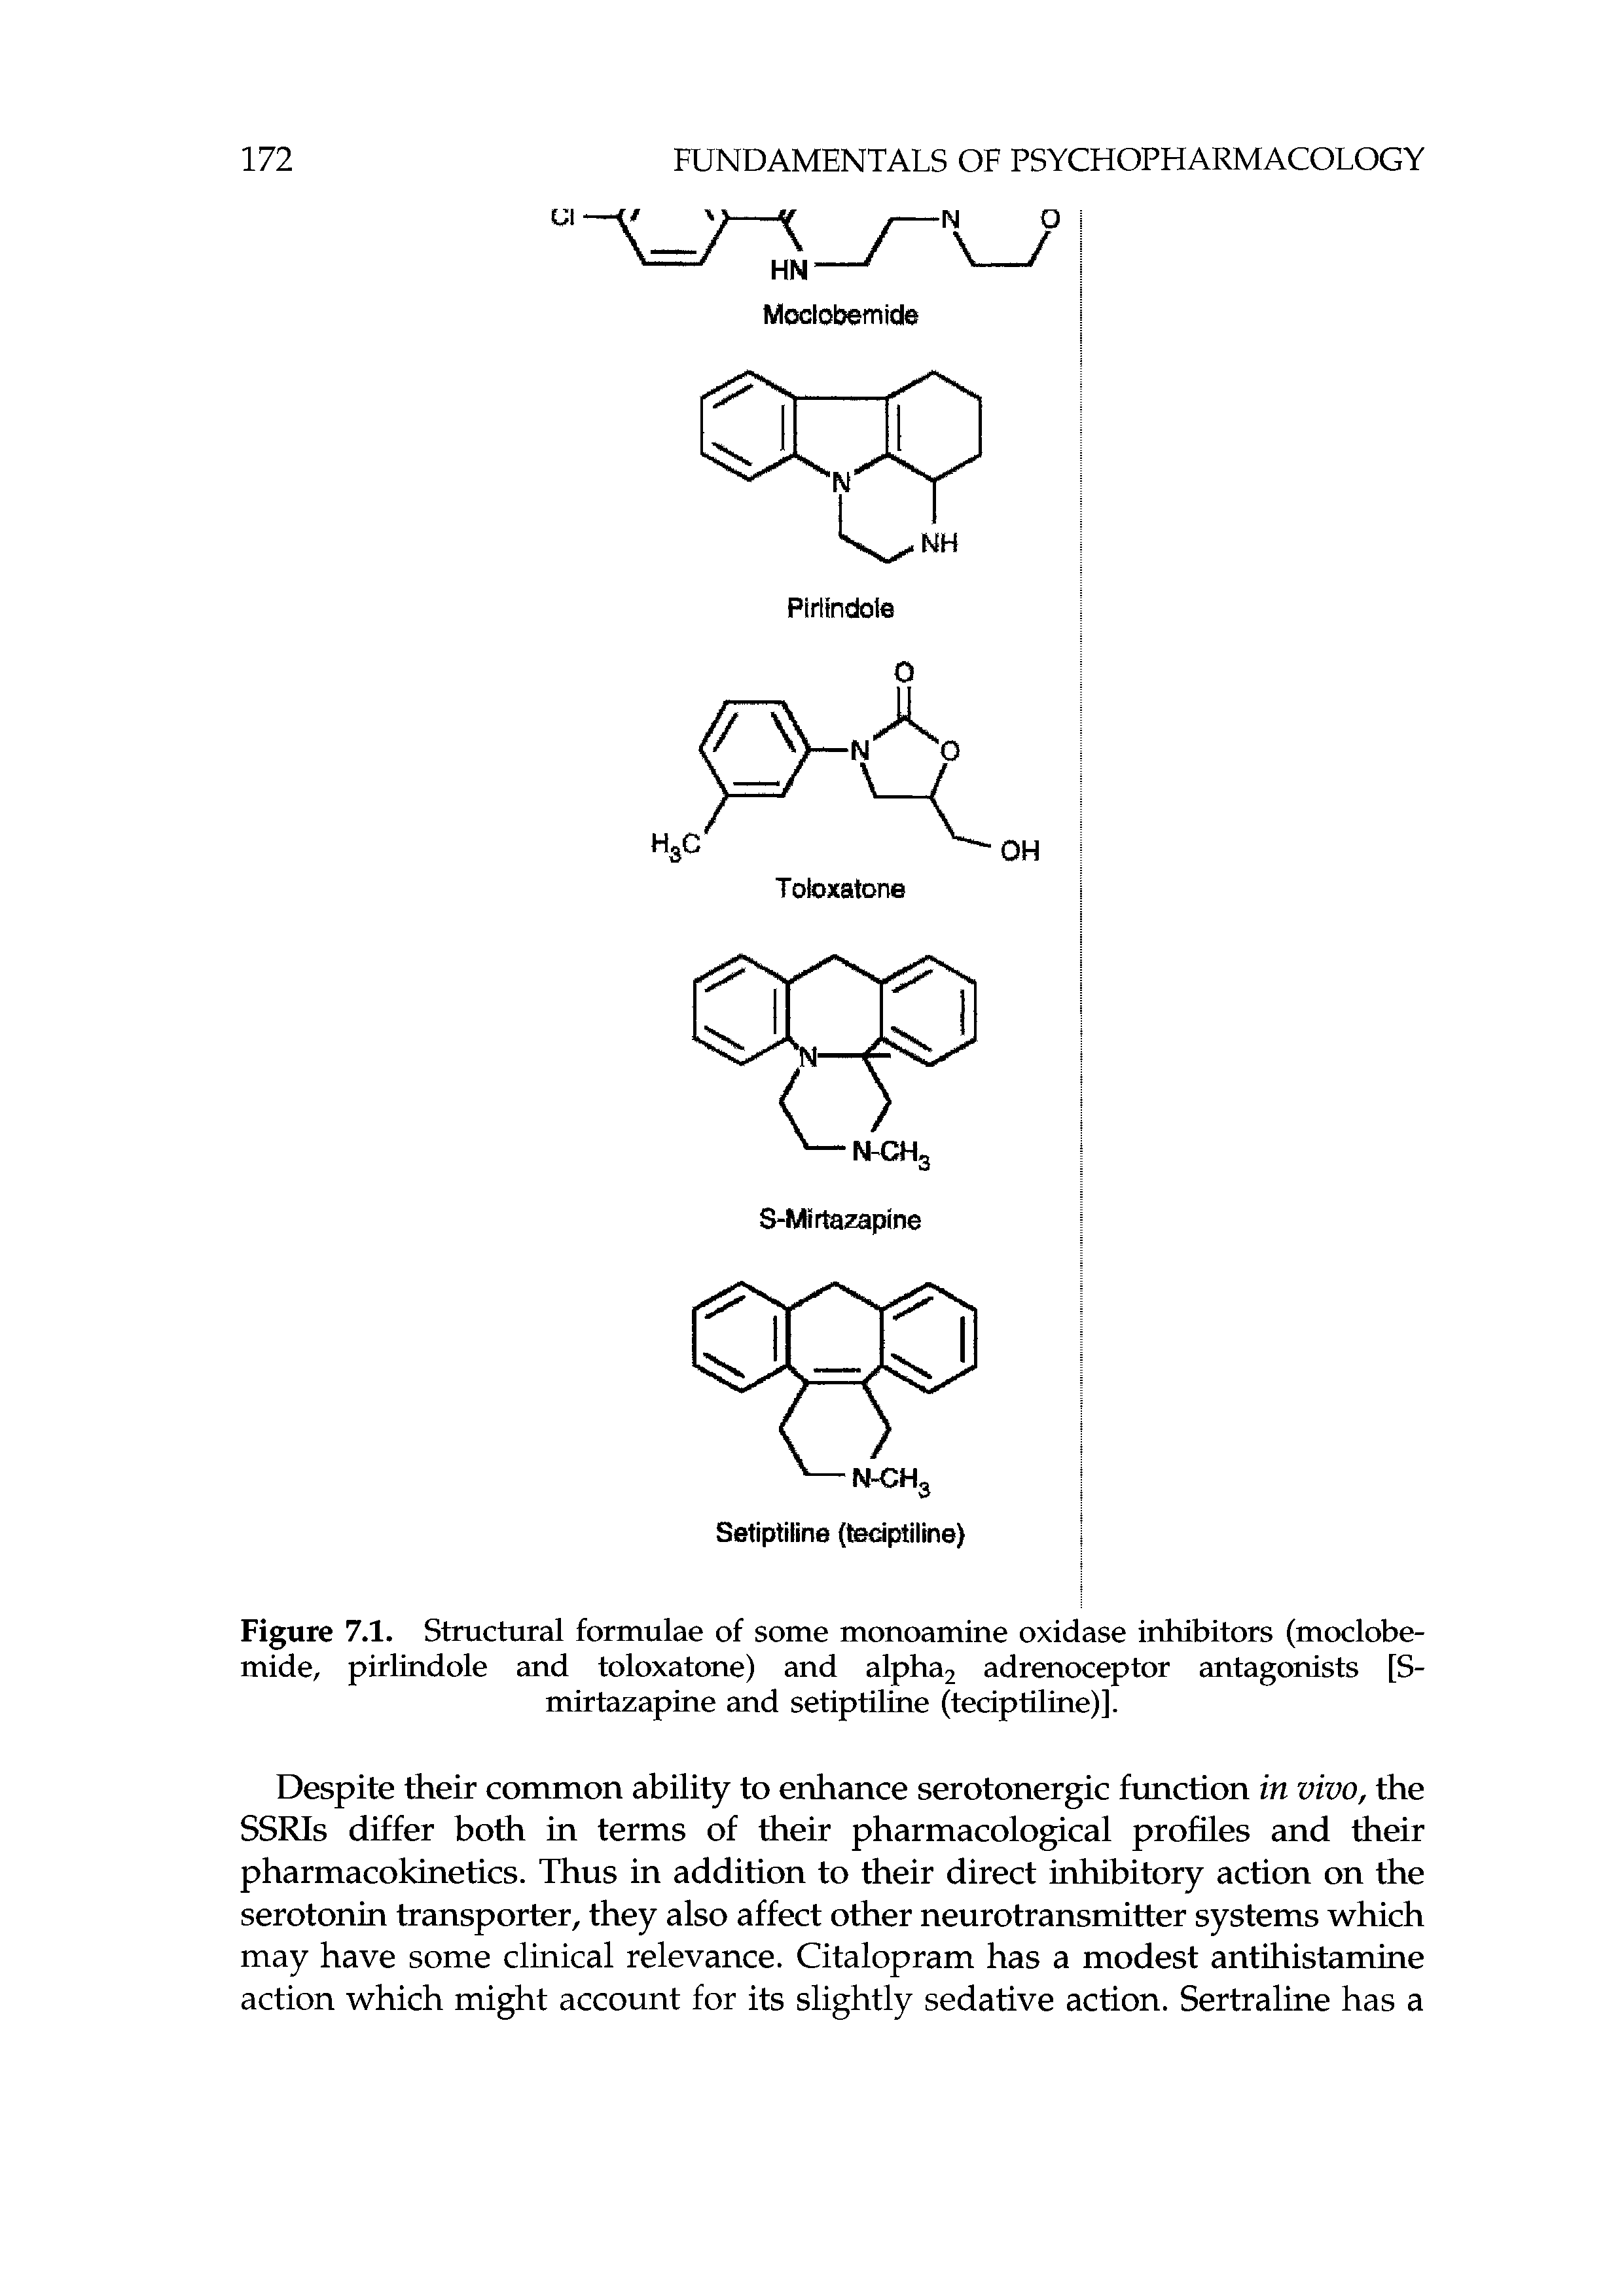 Figure 7.1, Structural formulae of some monoamine oxidase inhibitors (moclobemide, pirlindole and toloxatone) and alpha2 adrenoceptor antagonists [S-...